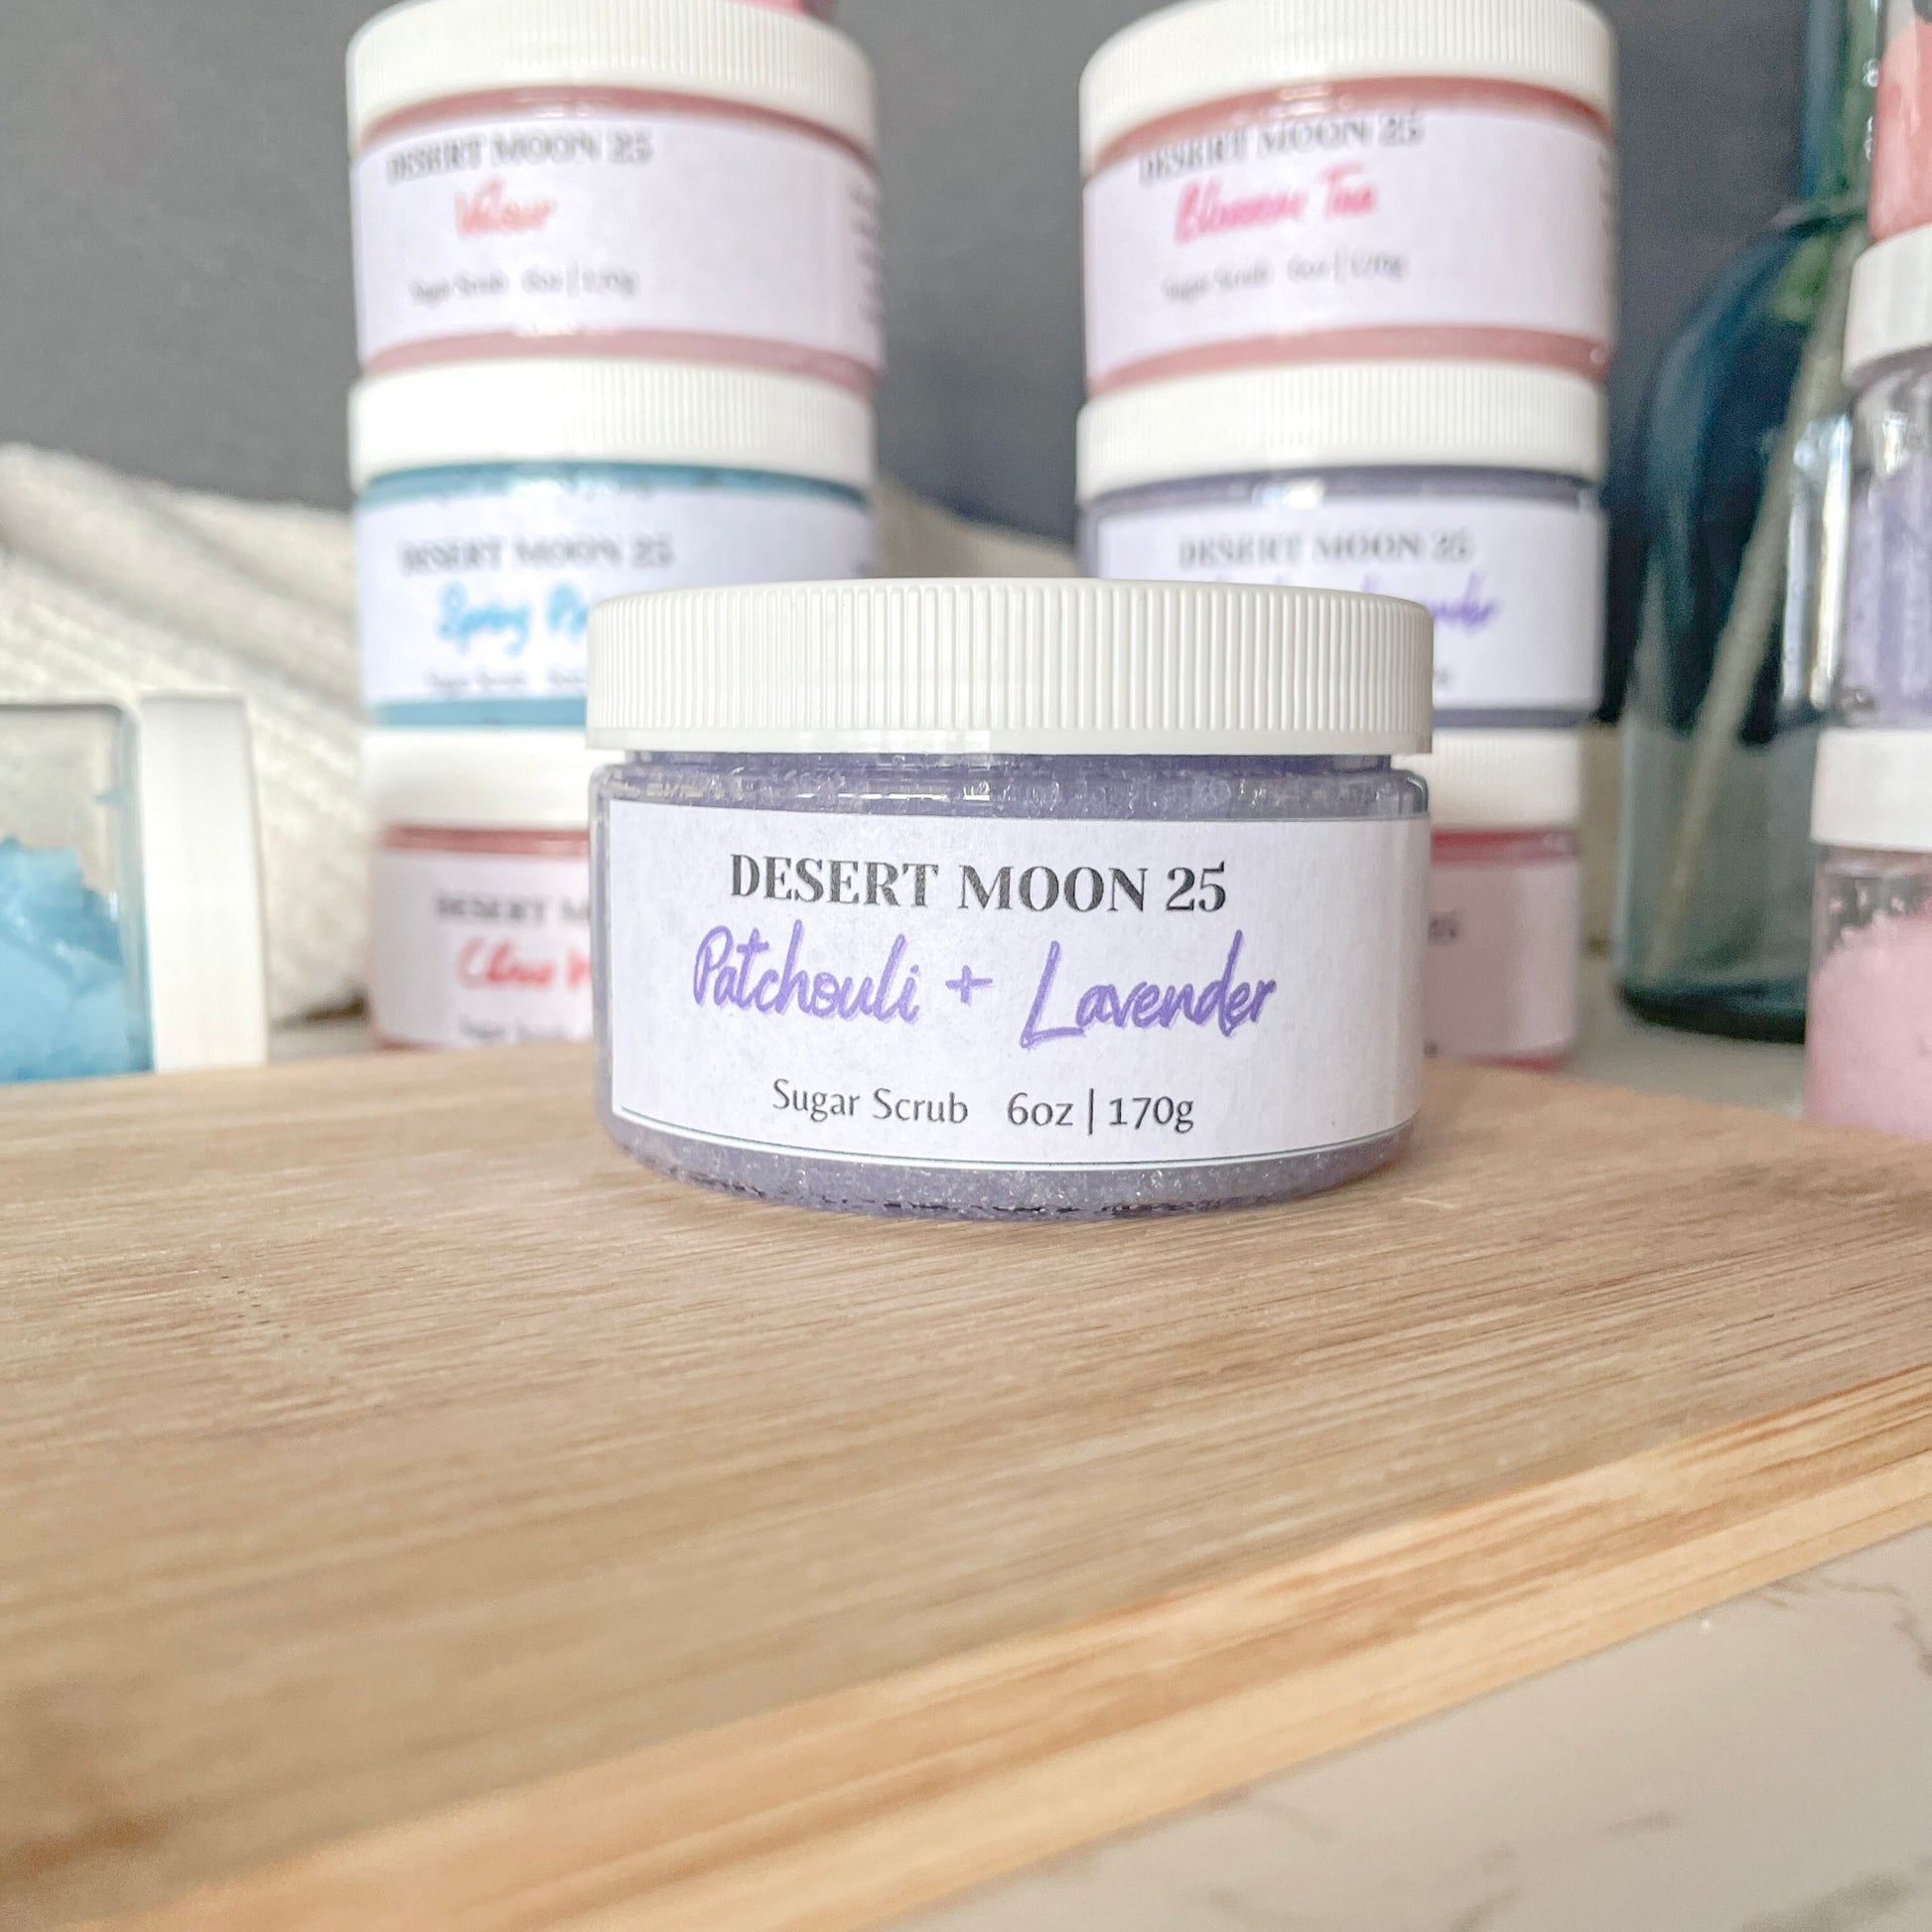 Patchouli + Lavender Sugar Scrub - Desert Moon 25